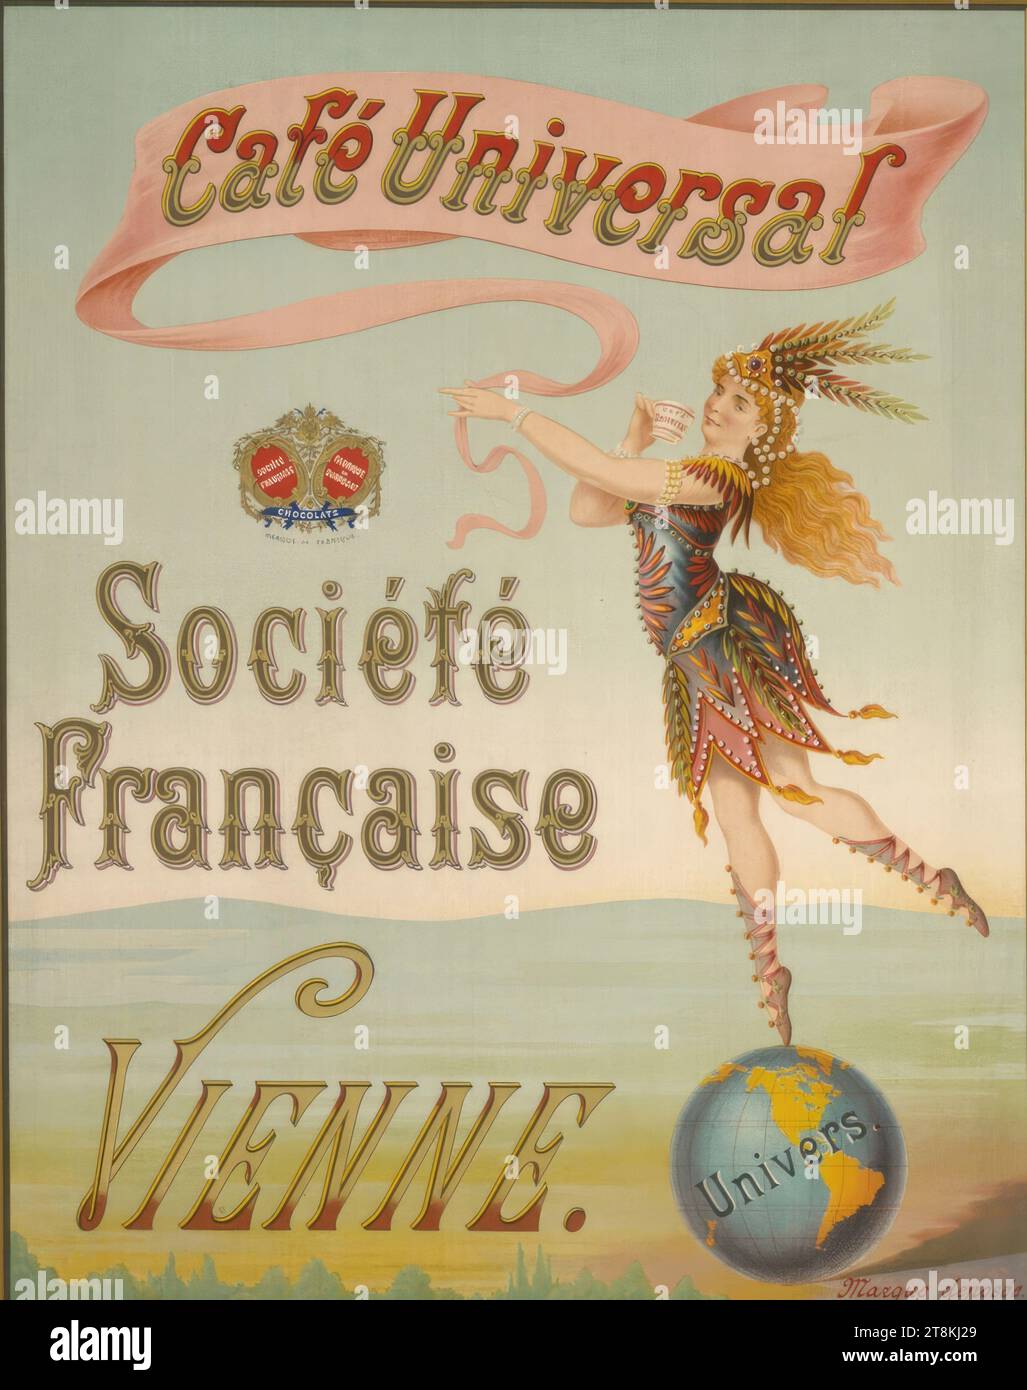 Café Universal; Société Francaise, VIENNE., Anonym, um 1900, Druck, Farblithografie, Blatt: 565 mm x 450 mm Stockfoto